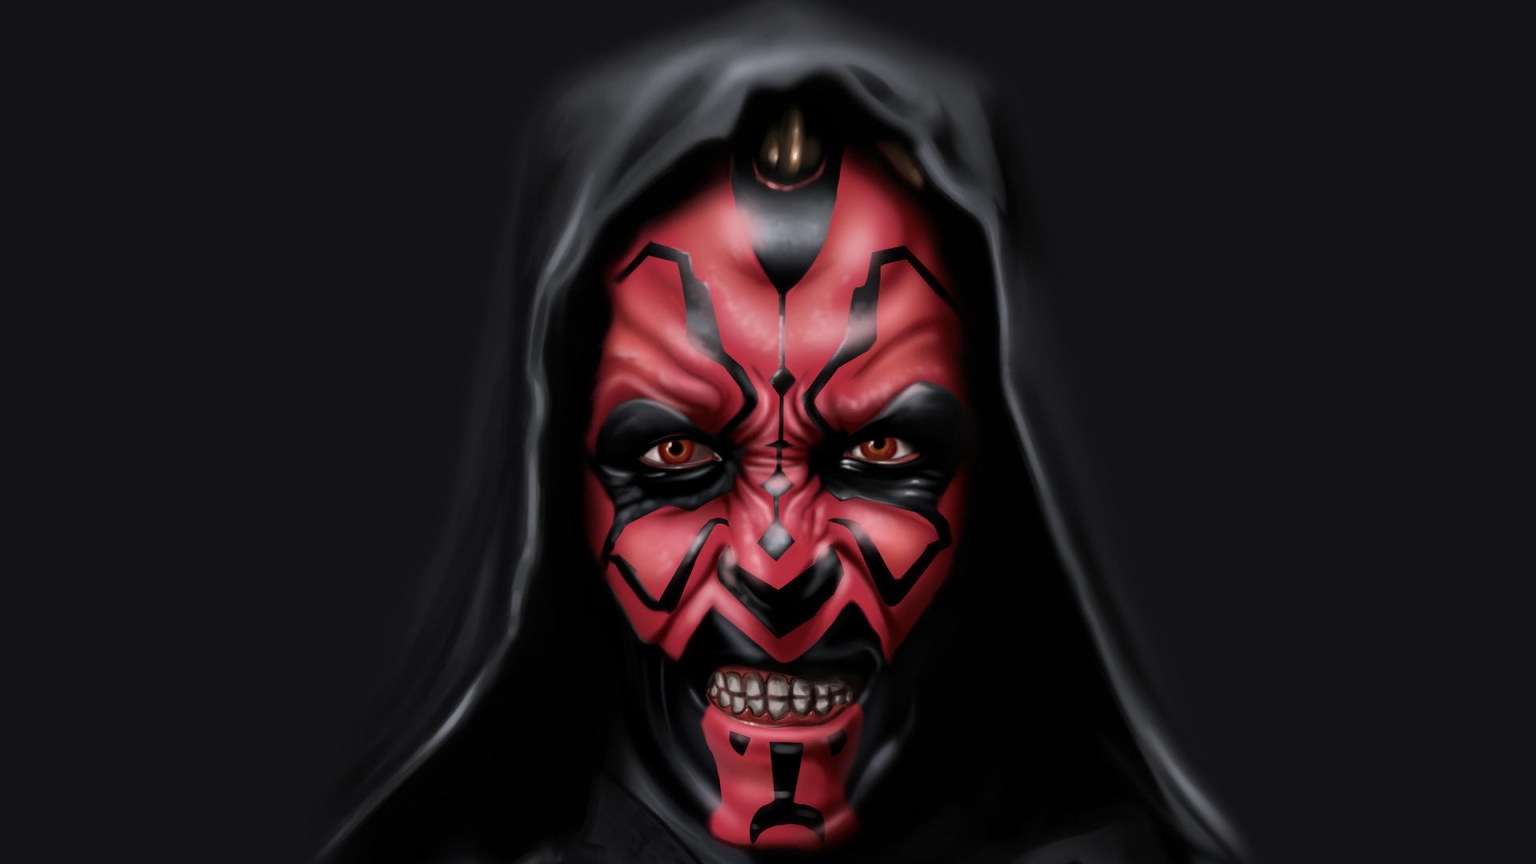 Darth Vader Animated for 1536 x 864 HDTV resolution